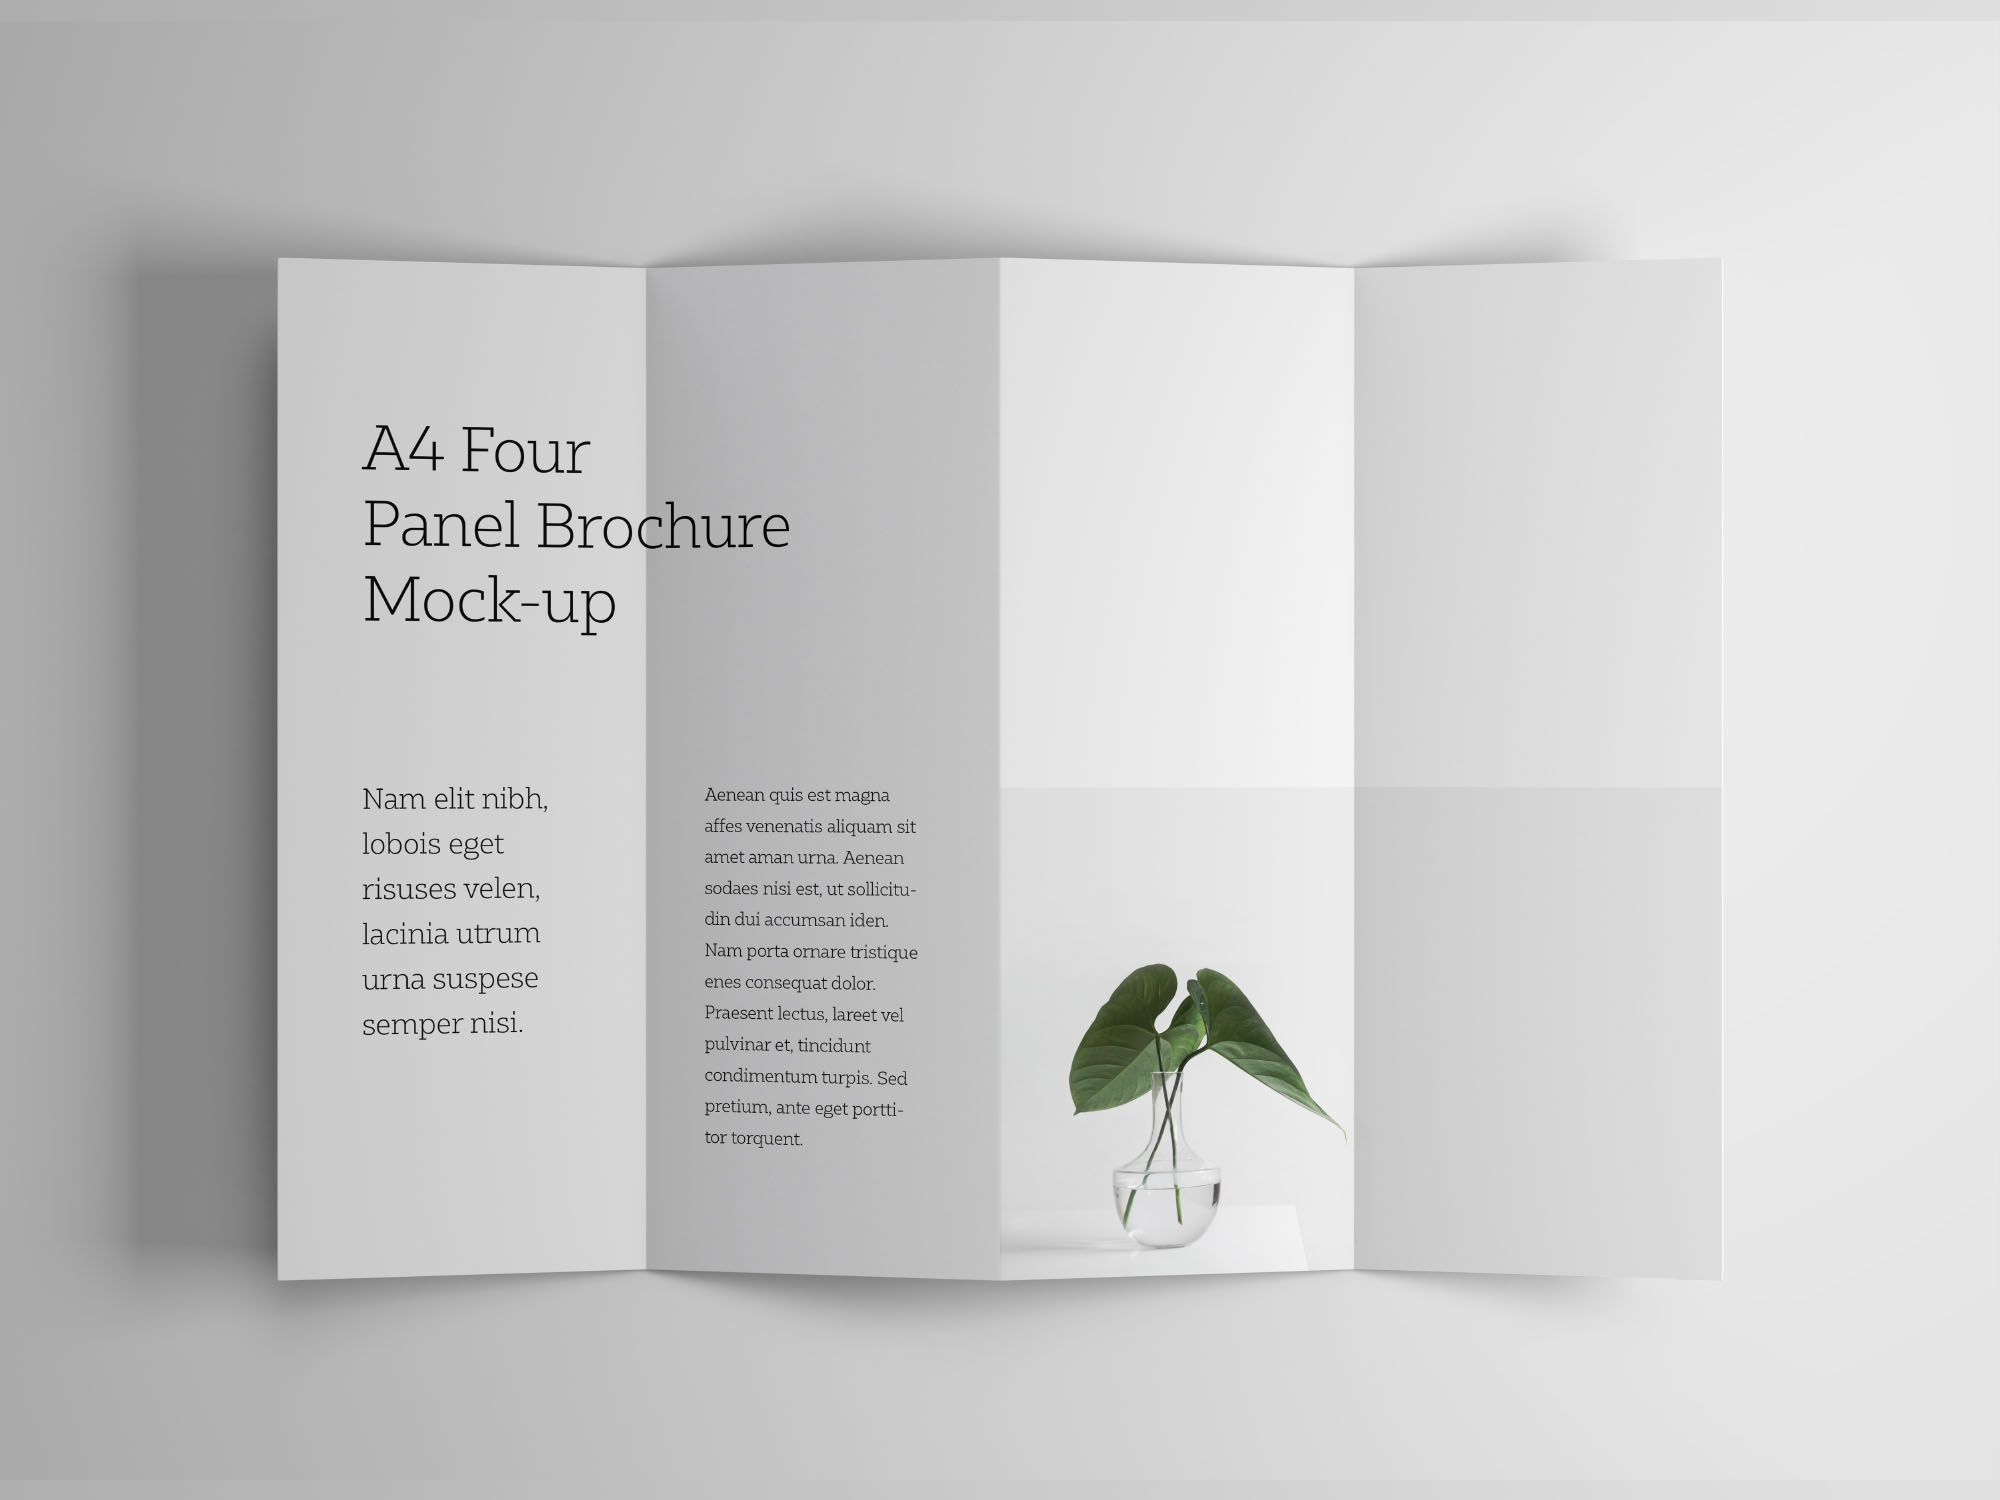 A4纸规格四折页宣传单设计样机模板 A4 Four Panel Brochure Mockup插图